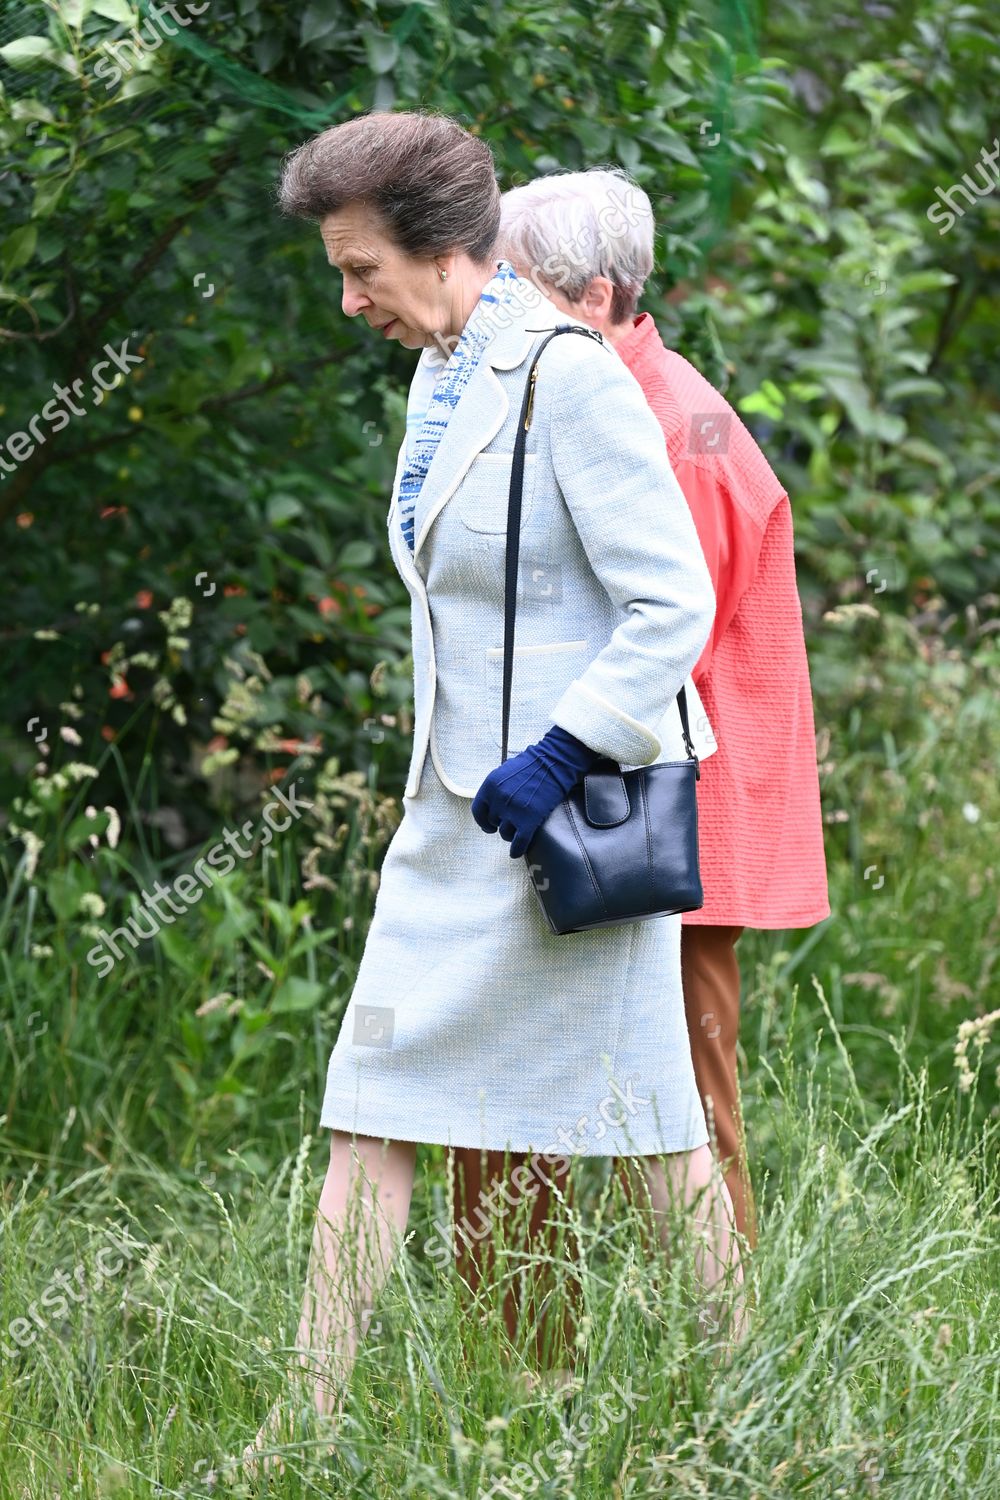 queen-elizabeth-ii-and-princess-anne-visit-the-childrens-wood-glasgow-scotland-uk-shutterstock-editorial-12189934ag.jpg